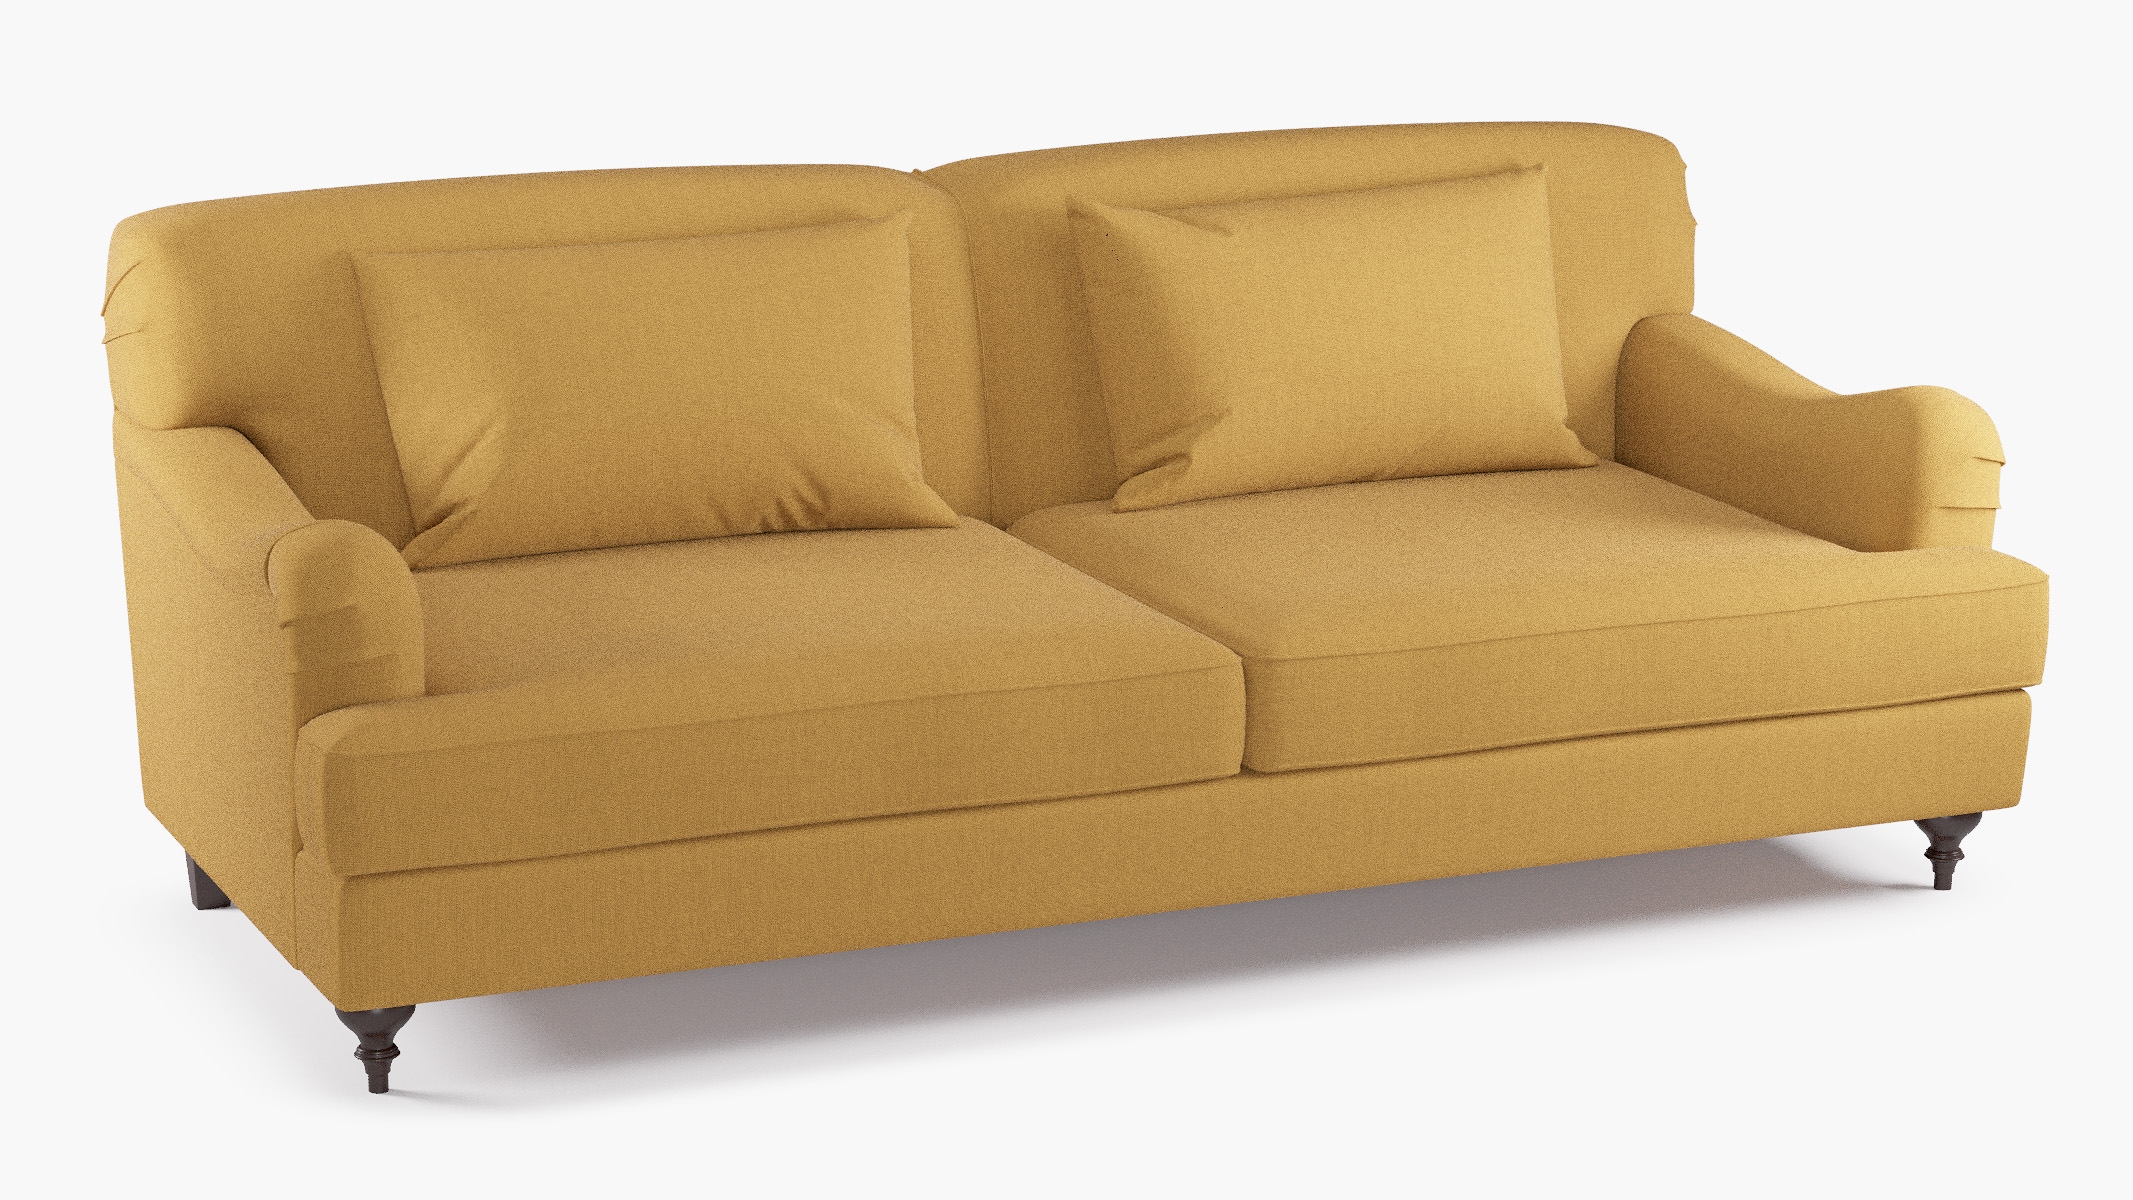 English Roll Arm Sofa, French Yellow Everyday Linen, Walnut - Image 1